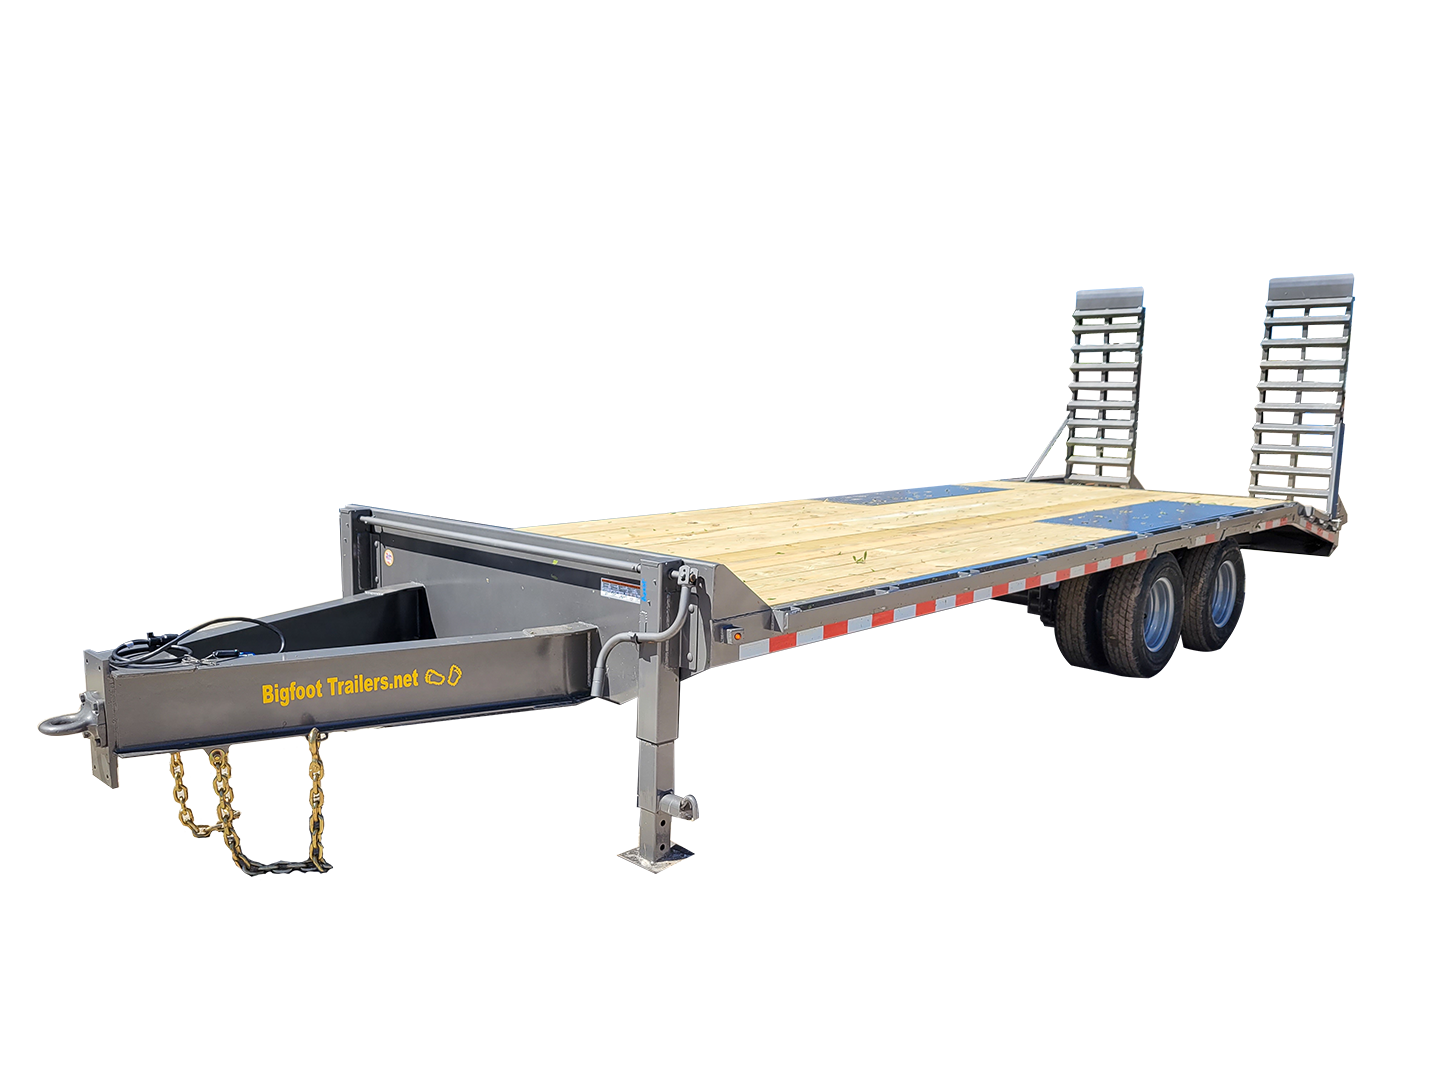 High quality bumper pull deckover trailers in Ashland VA